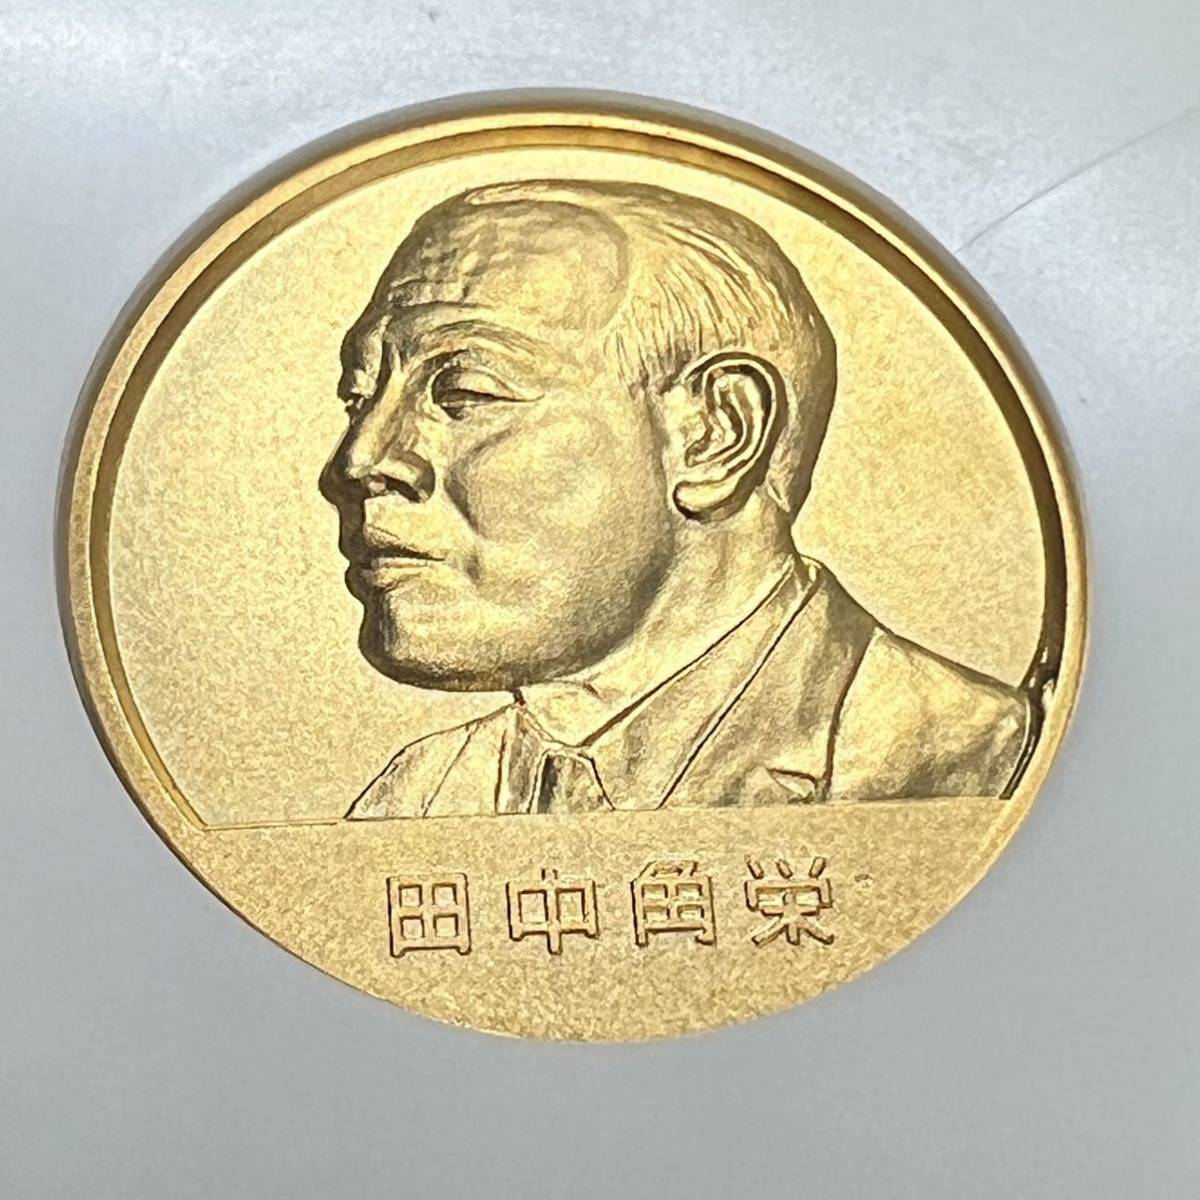 純銀製 内閣総理大臣田中角栄就任記念メダル - 体育器具、用品